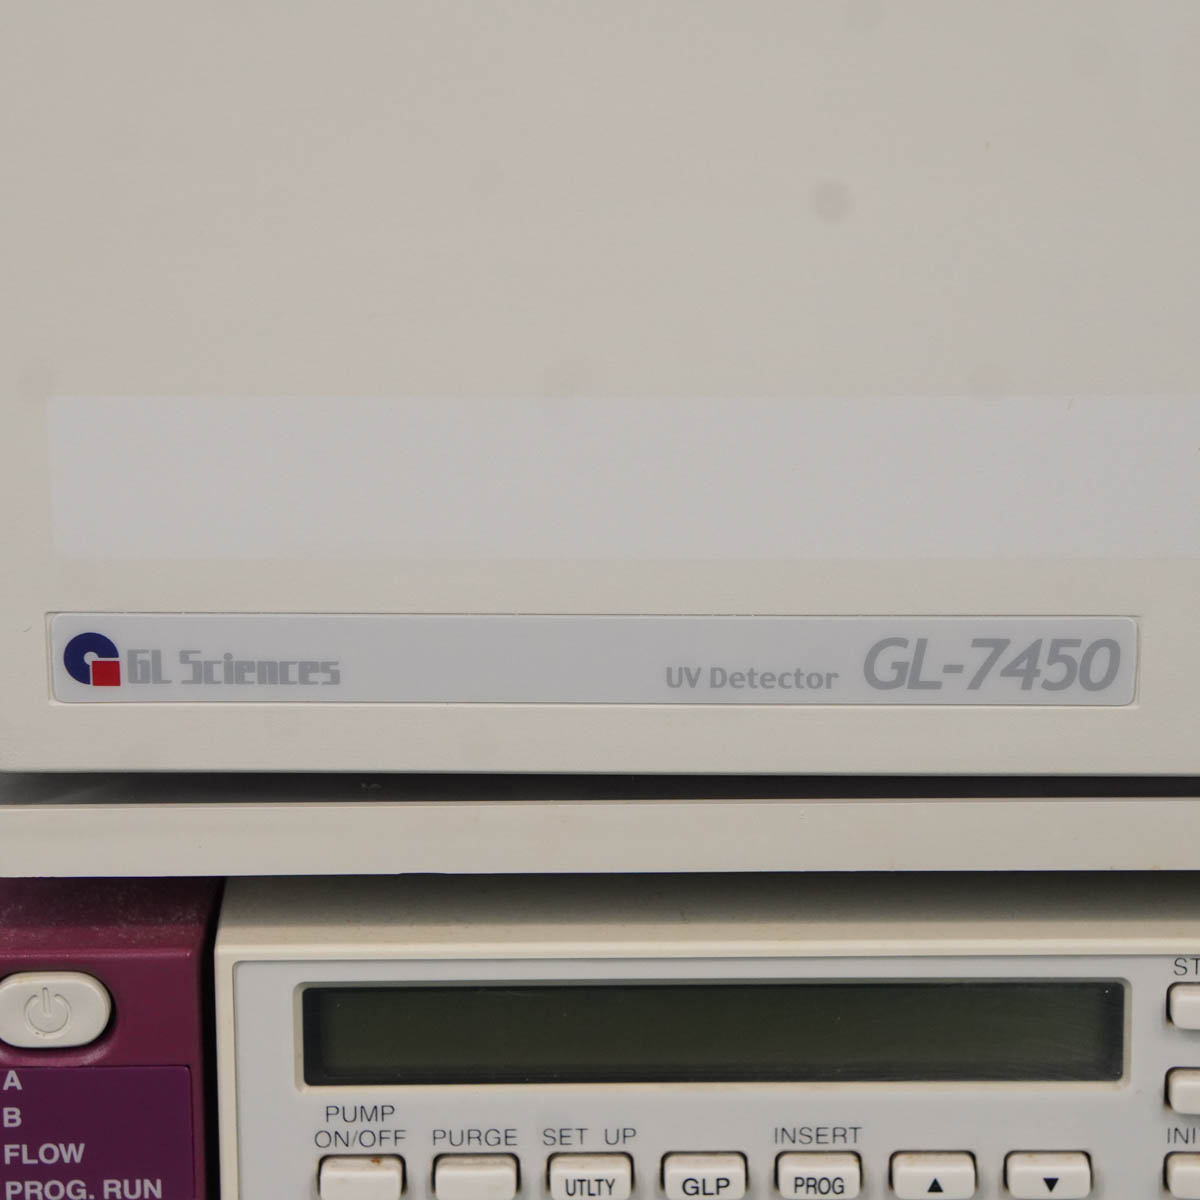 DW]USED 8日保証 セット GL Sciences GL-7480 GL-7450 GL-7410 HPLC 液クロ GL-7400  Liquid Chromatograph Solvent Rese...[ST04013-0098] 分析機器,液体クロマトグラフ  中古販売分析機器計測器総合商社ディルウィングス